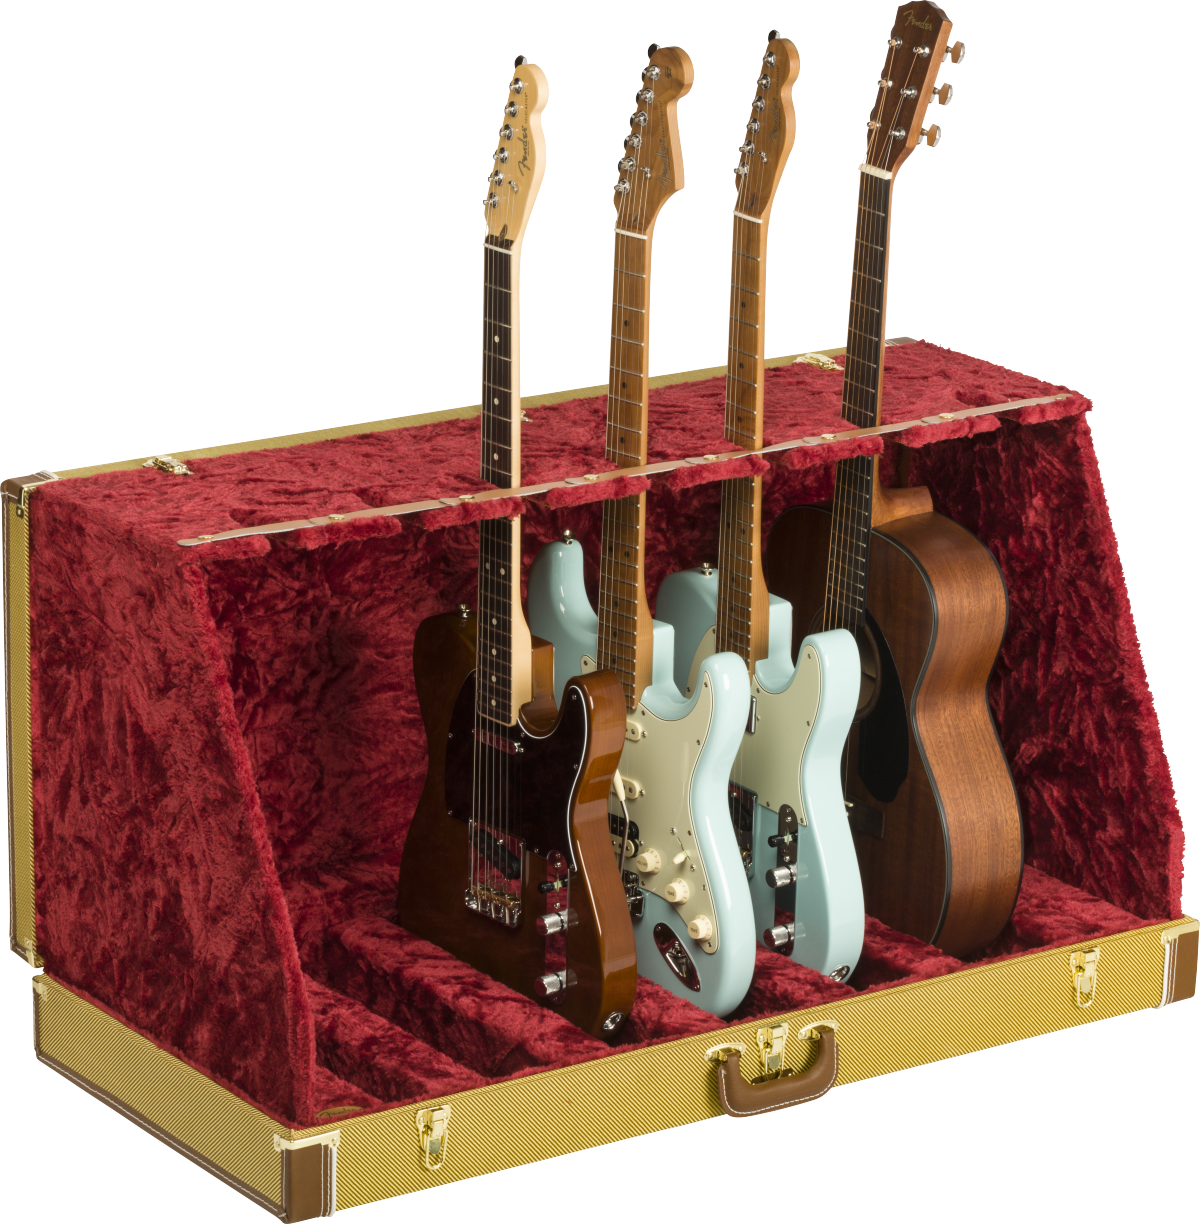 Fender Classic Series Case Guitar Stand, 7 Guitar Tweed